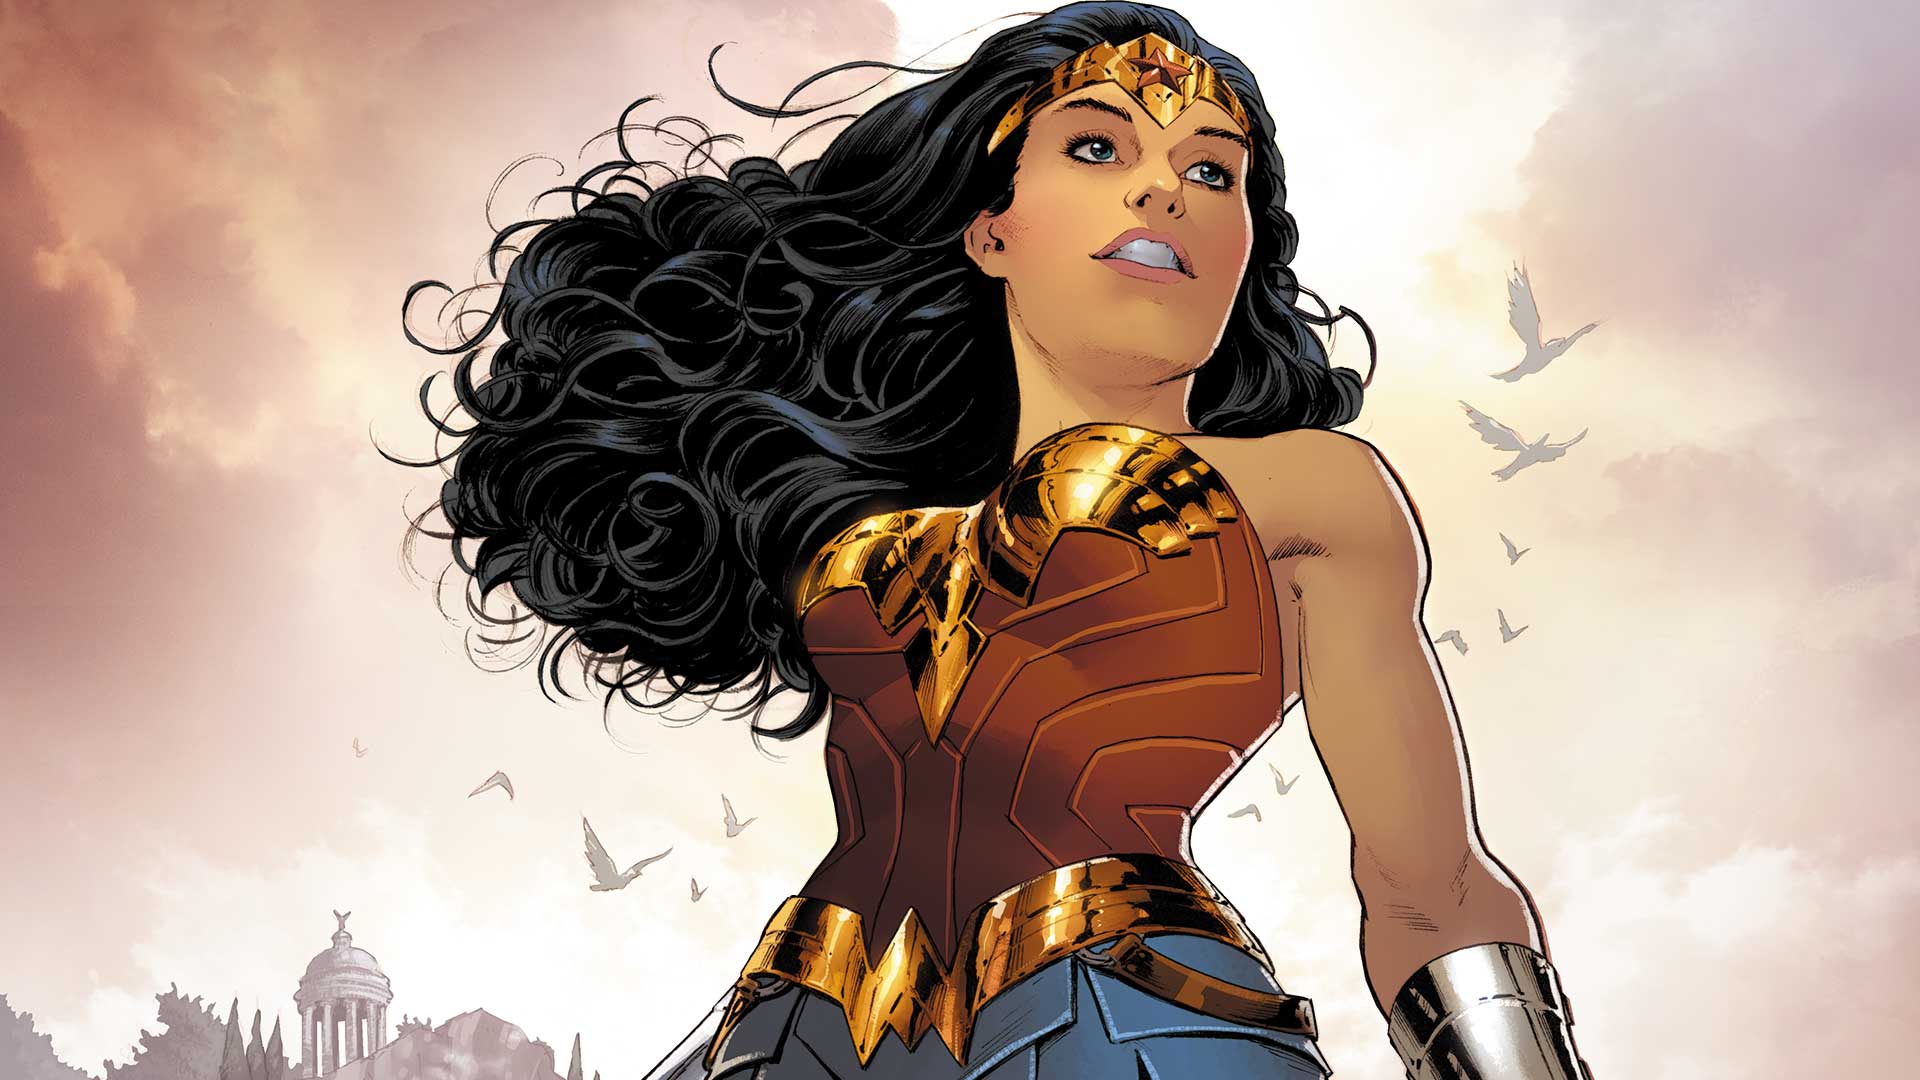 Wonder Woman has a superhero girlfriend in new DC Comics series